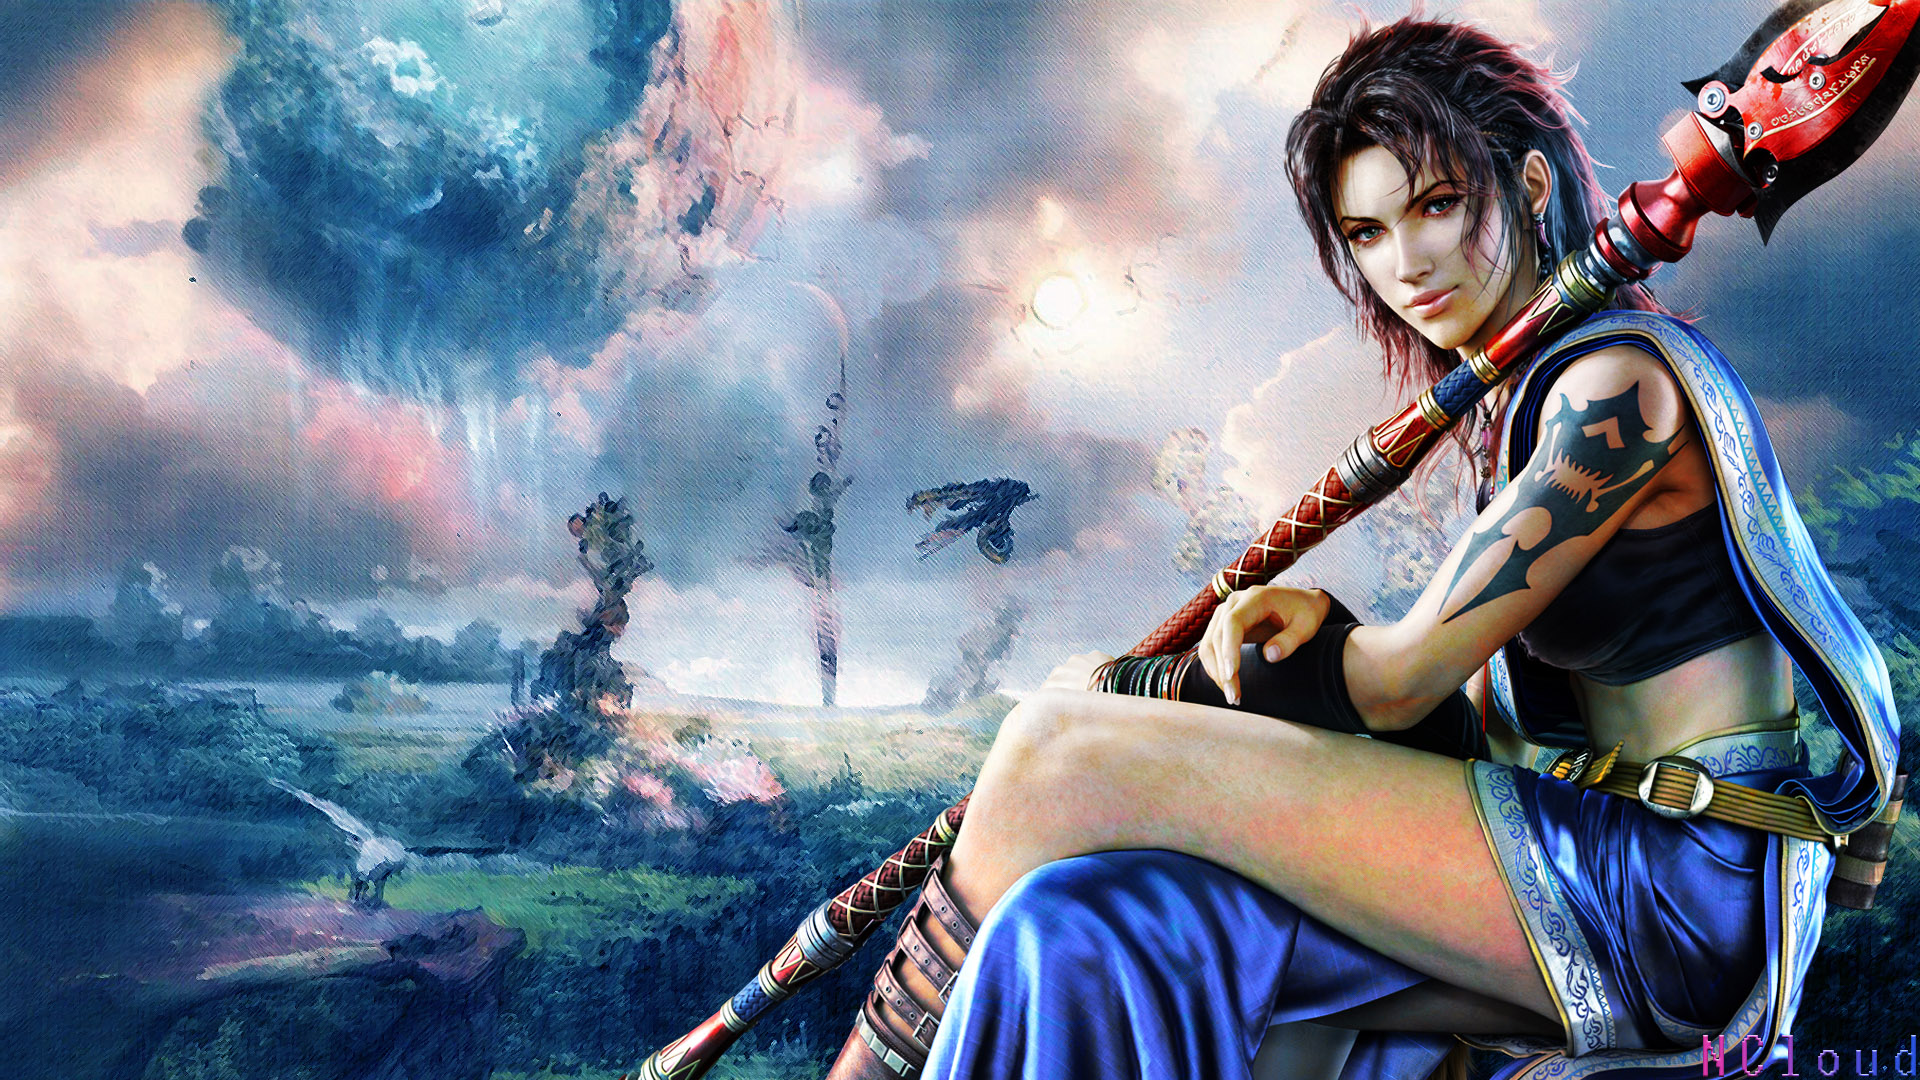 Final Fantasy wallpapers for desktop | Pocket Tactics